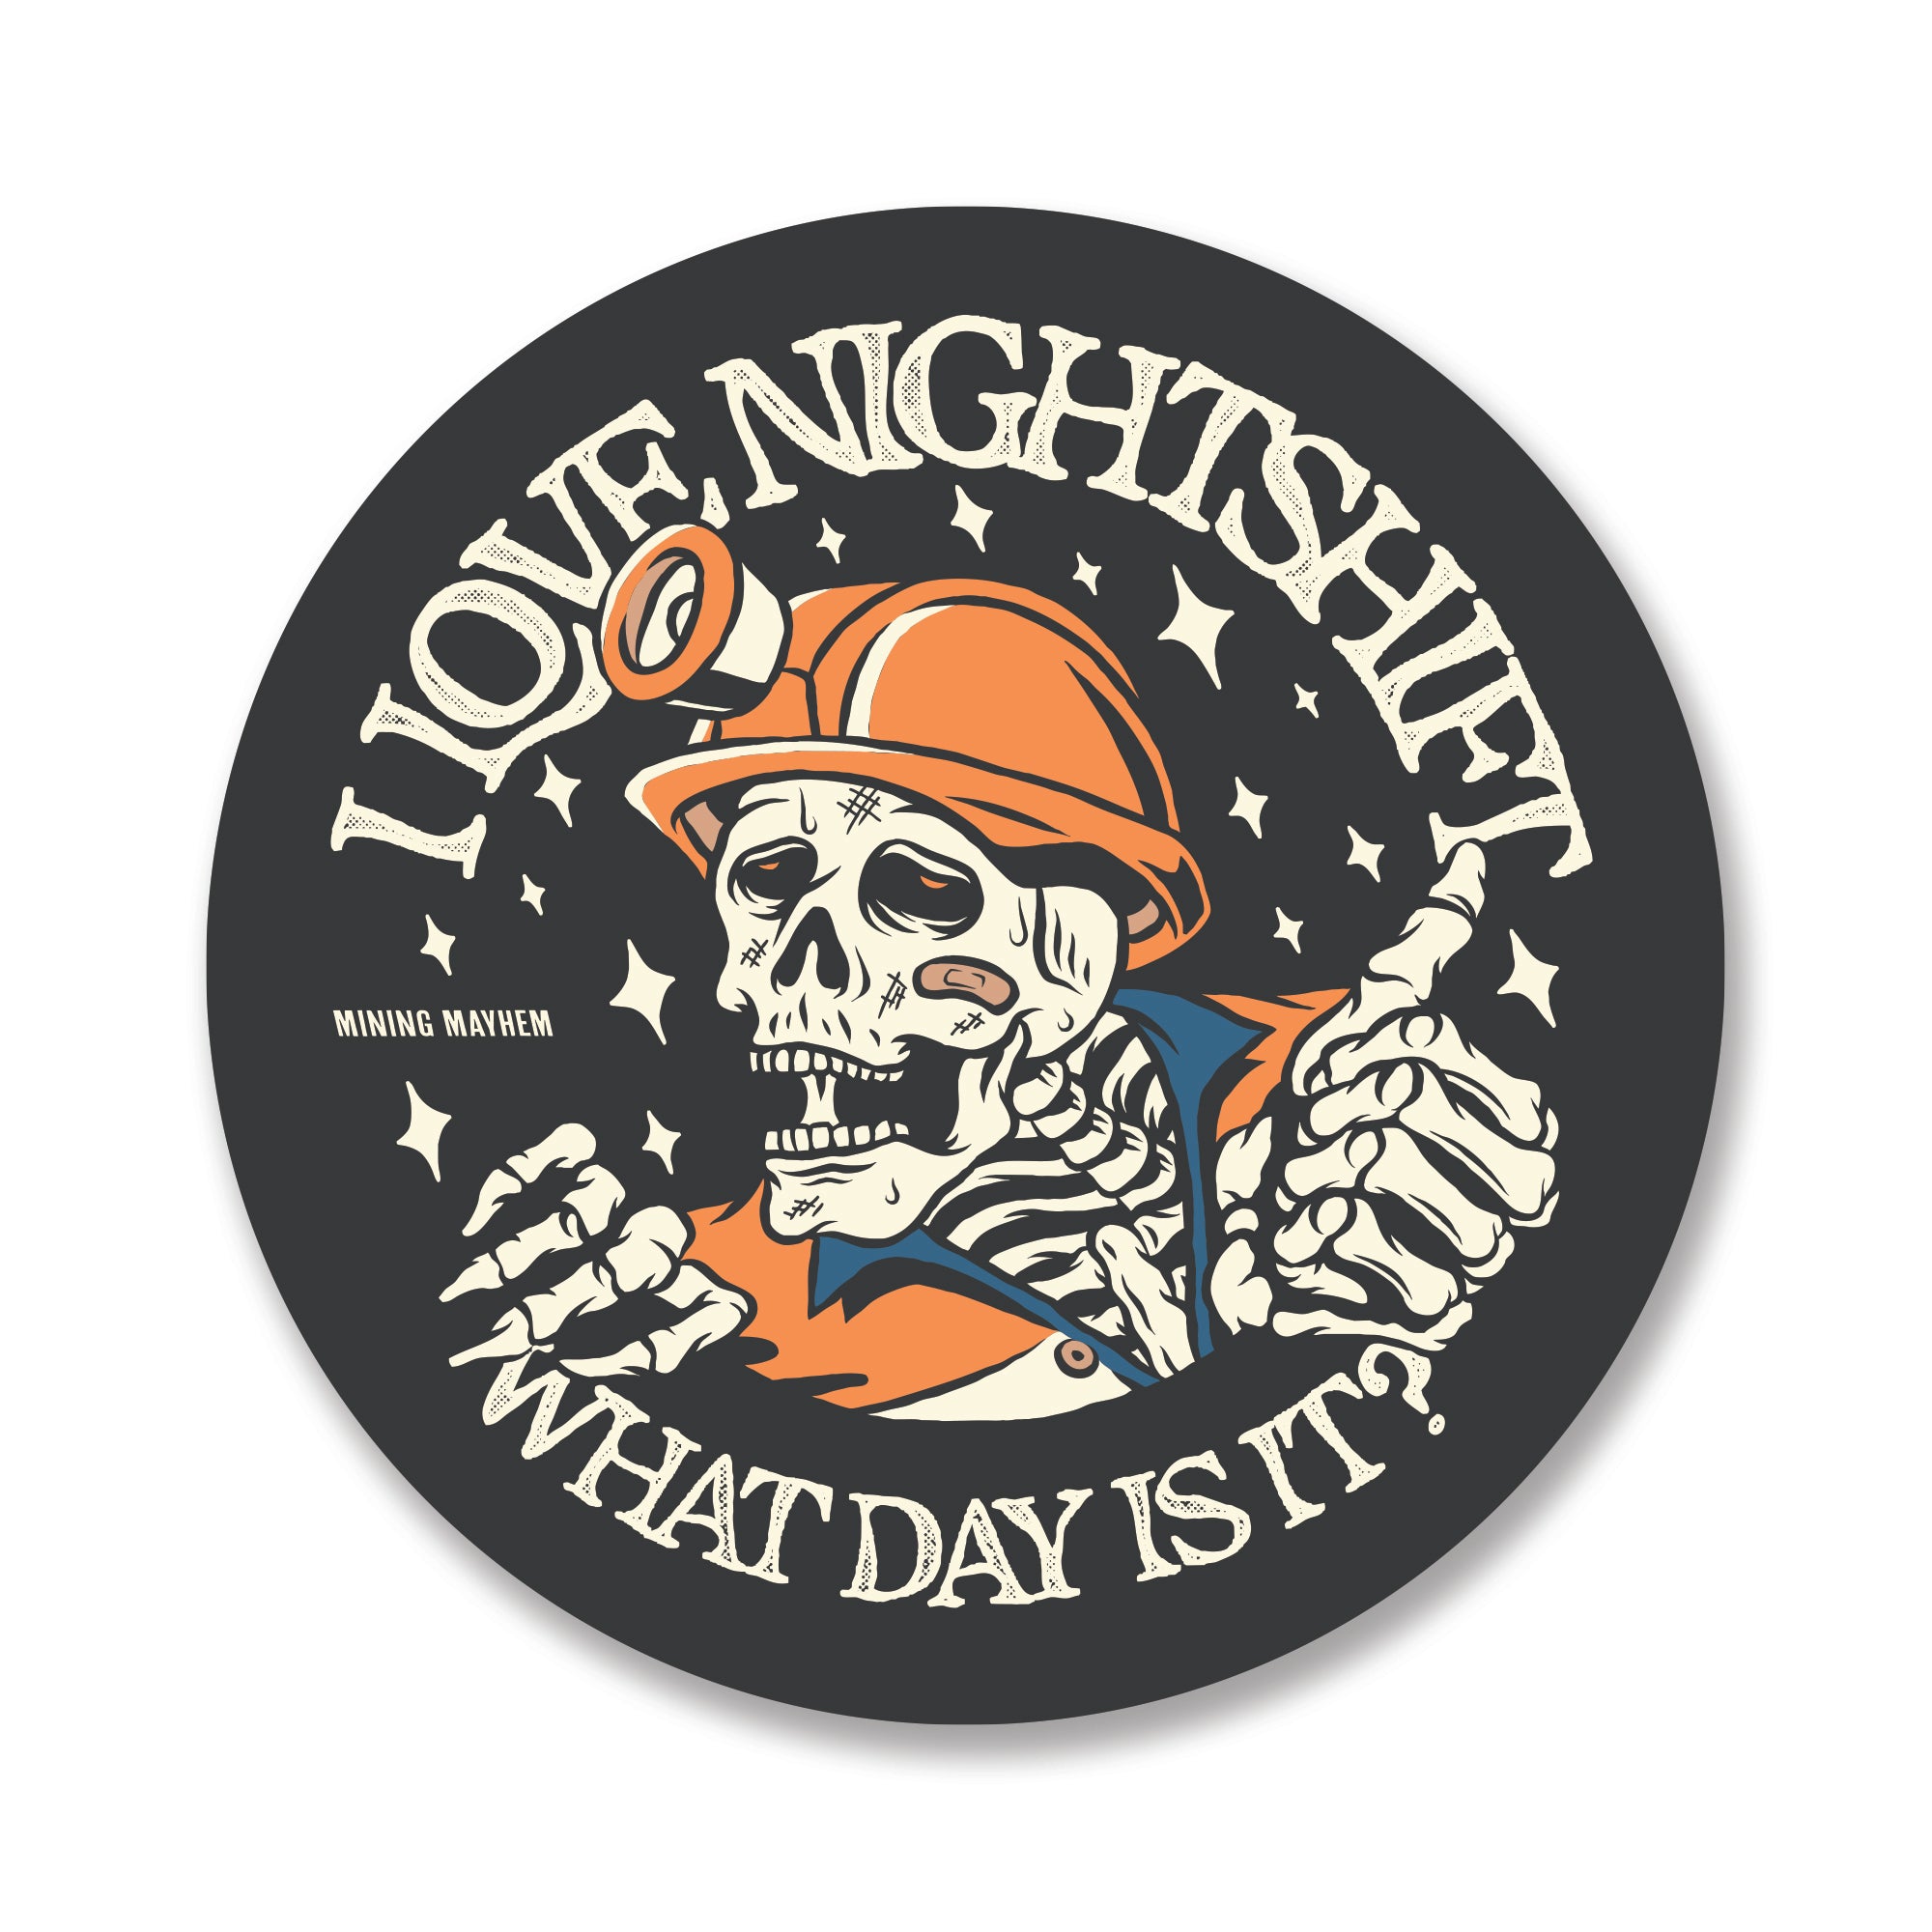 I Love Nightshift What Day Is It? - Sticker